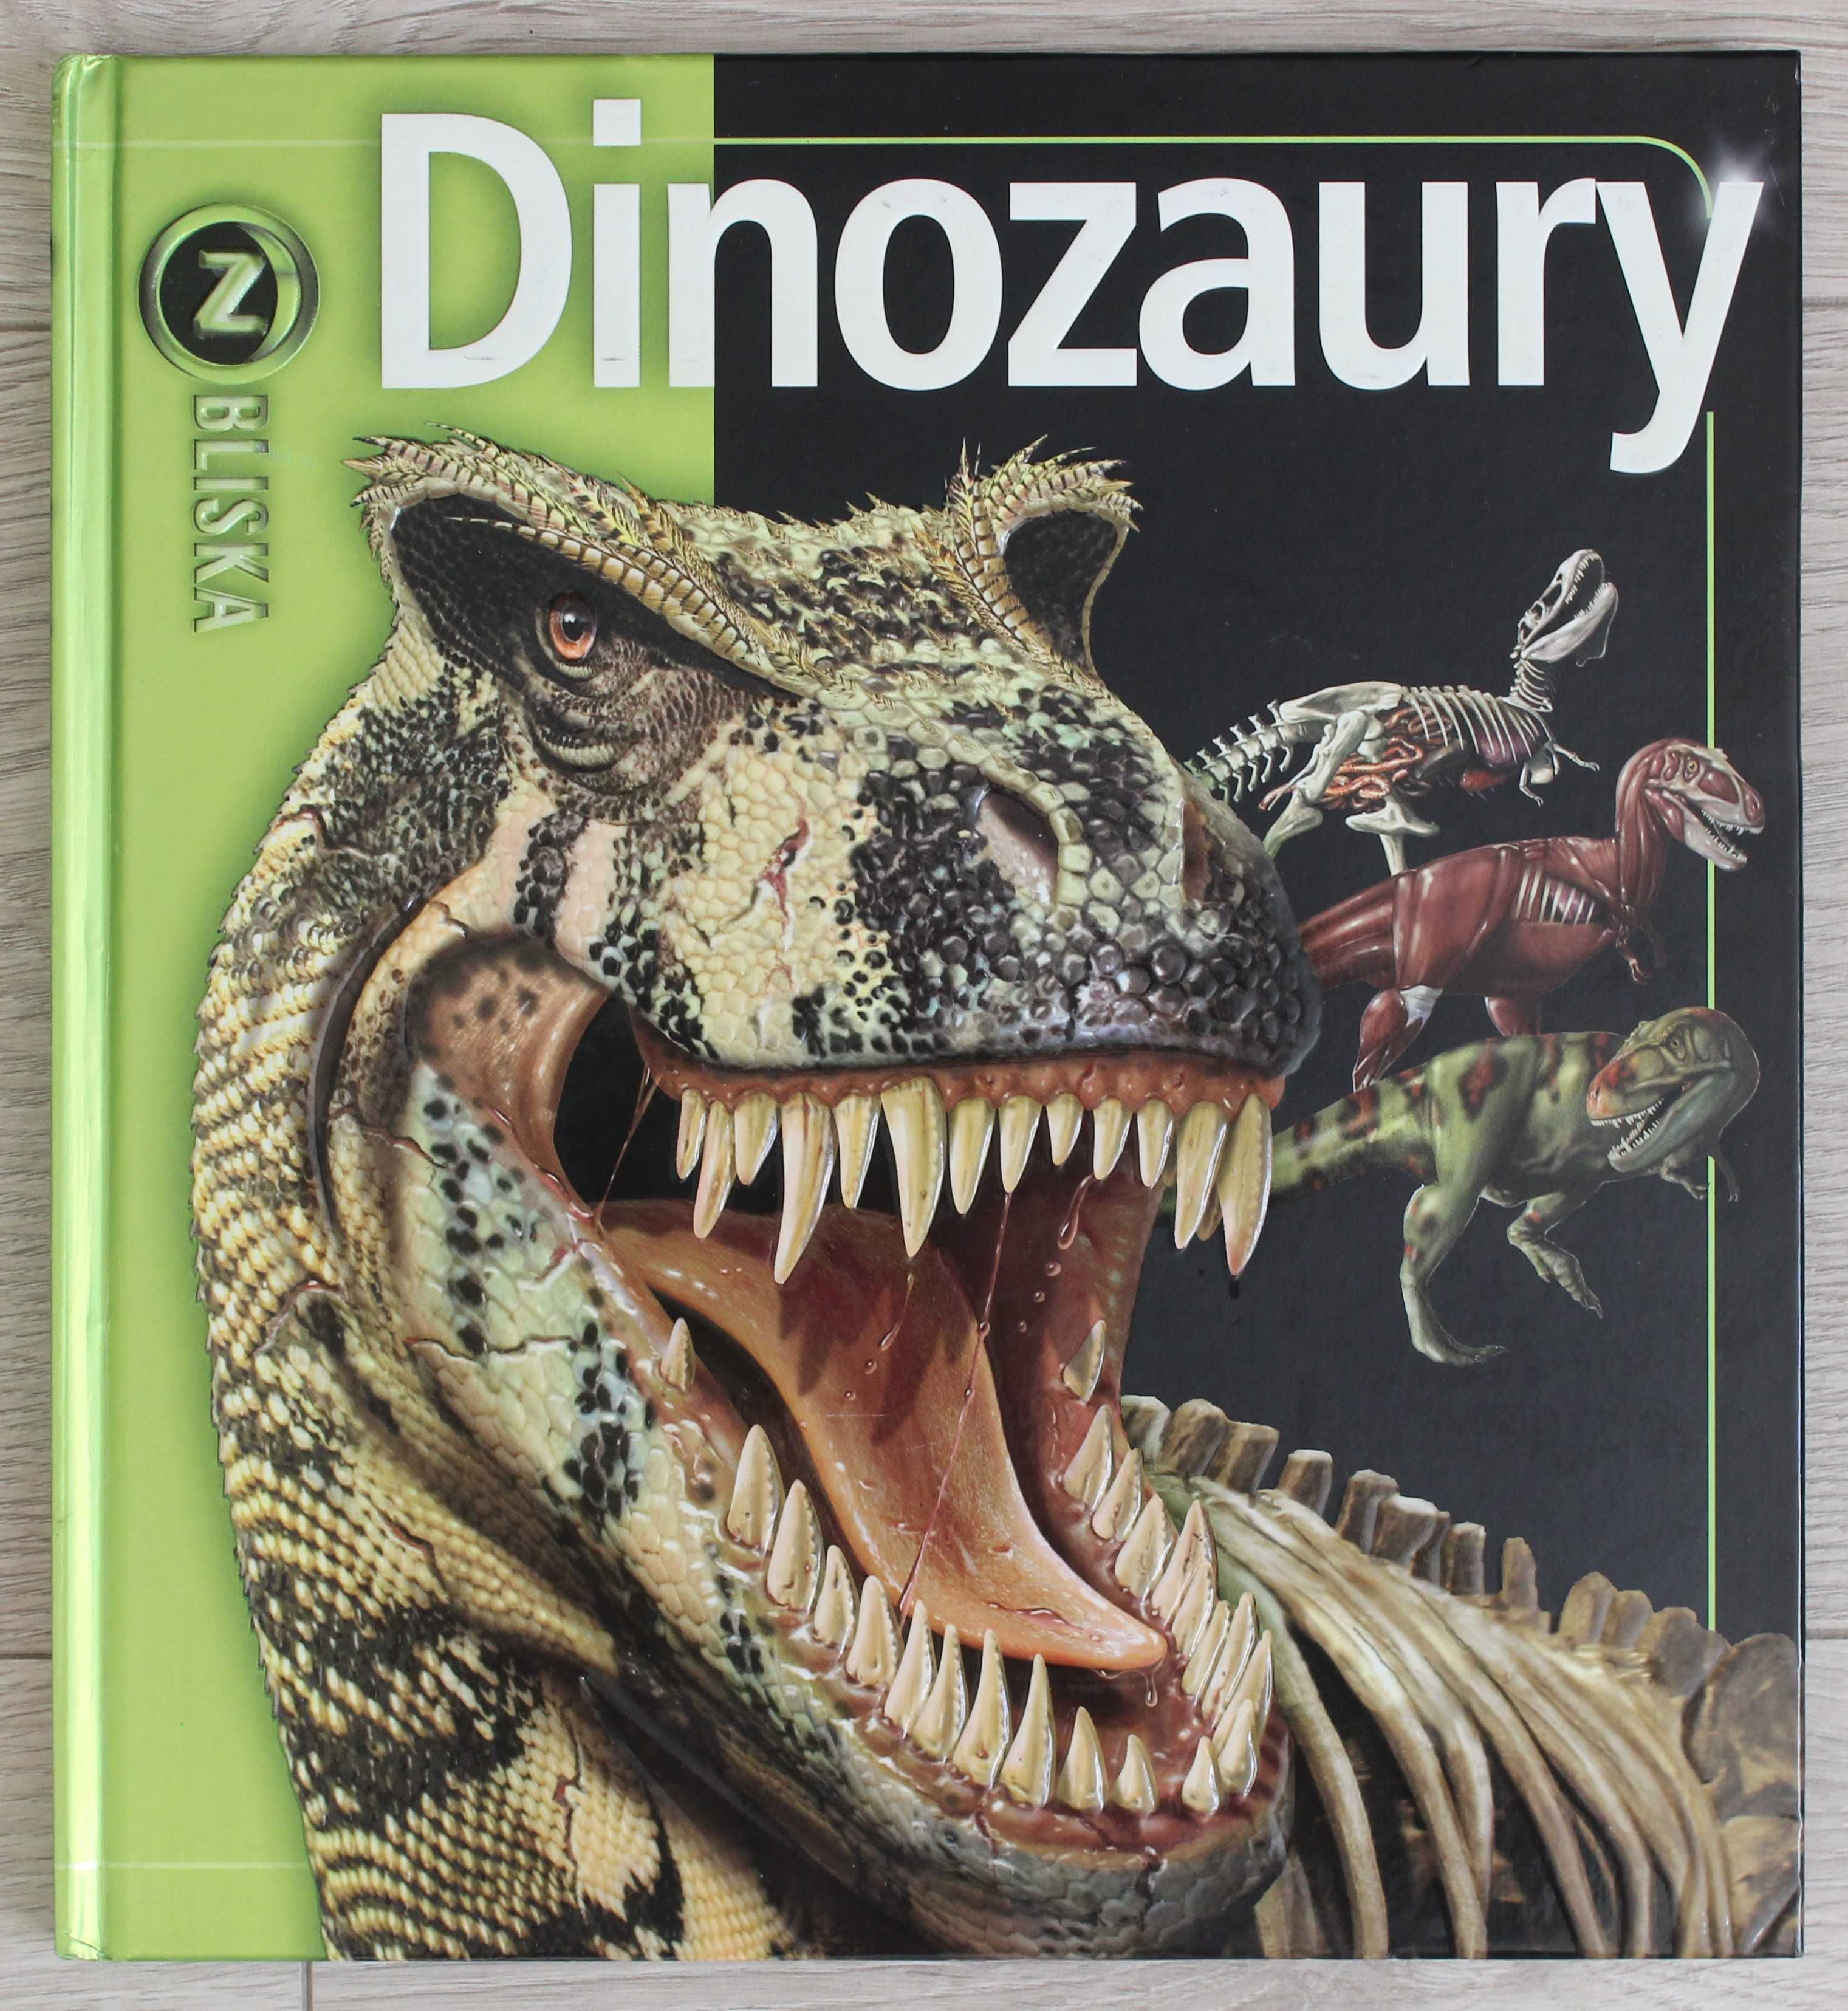 Dinozaury z bliska, John Long, Buchmann, encyklopiedia o dinozaurach